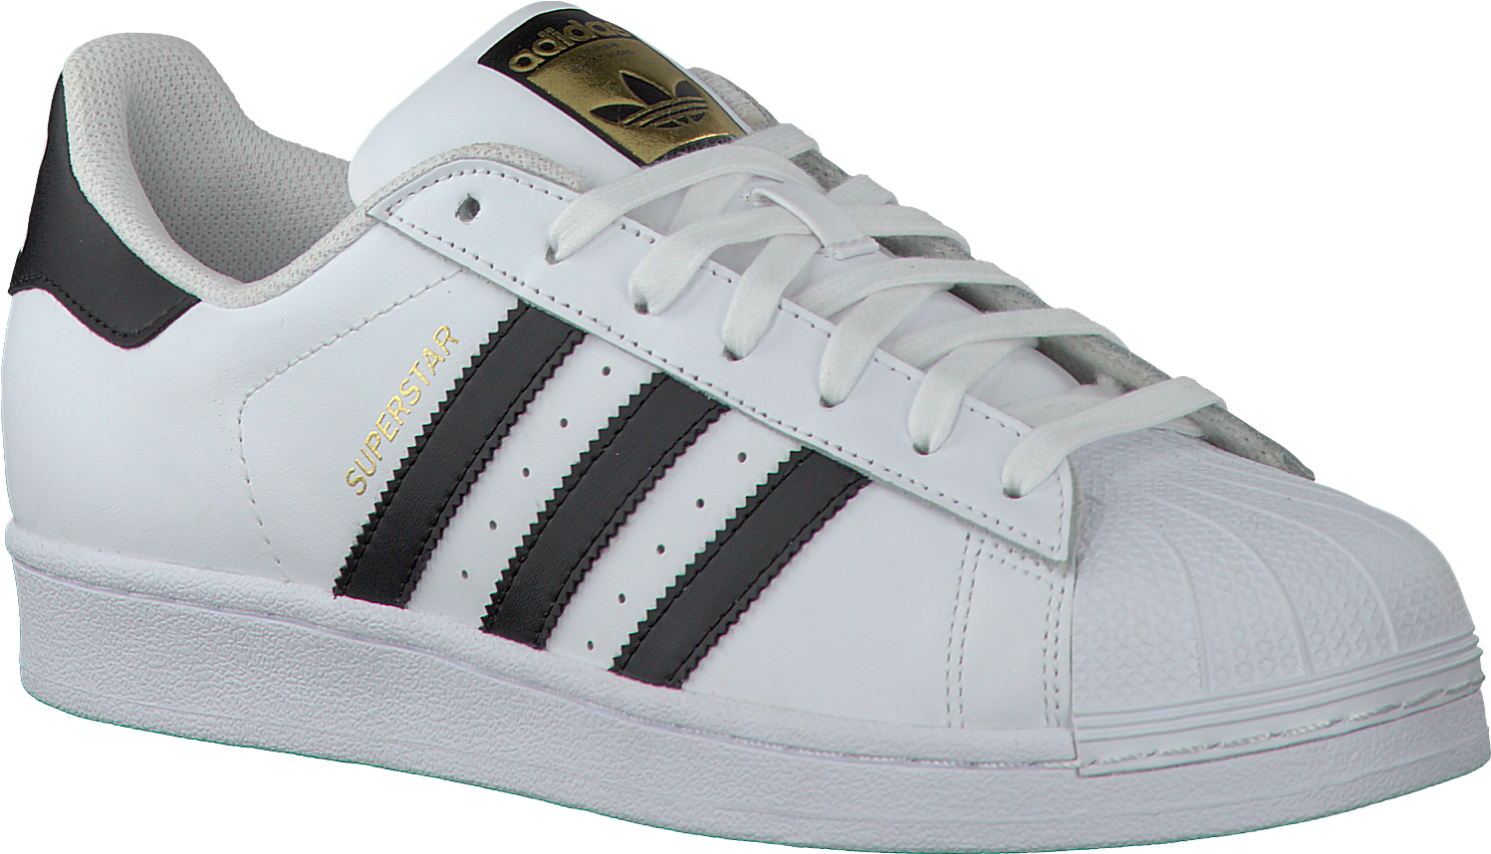 A White Shoe With Black Stripes